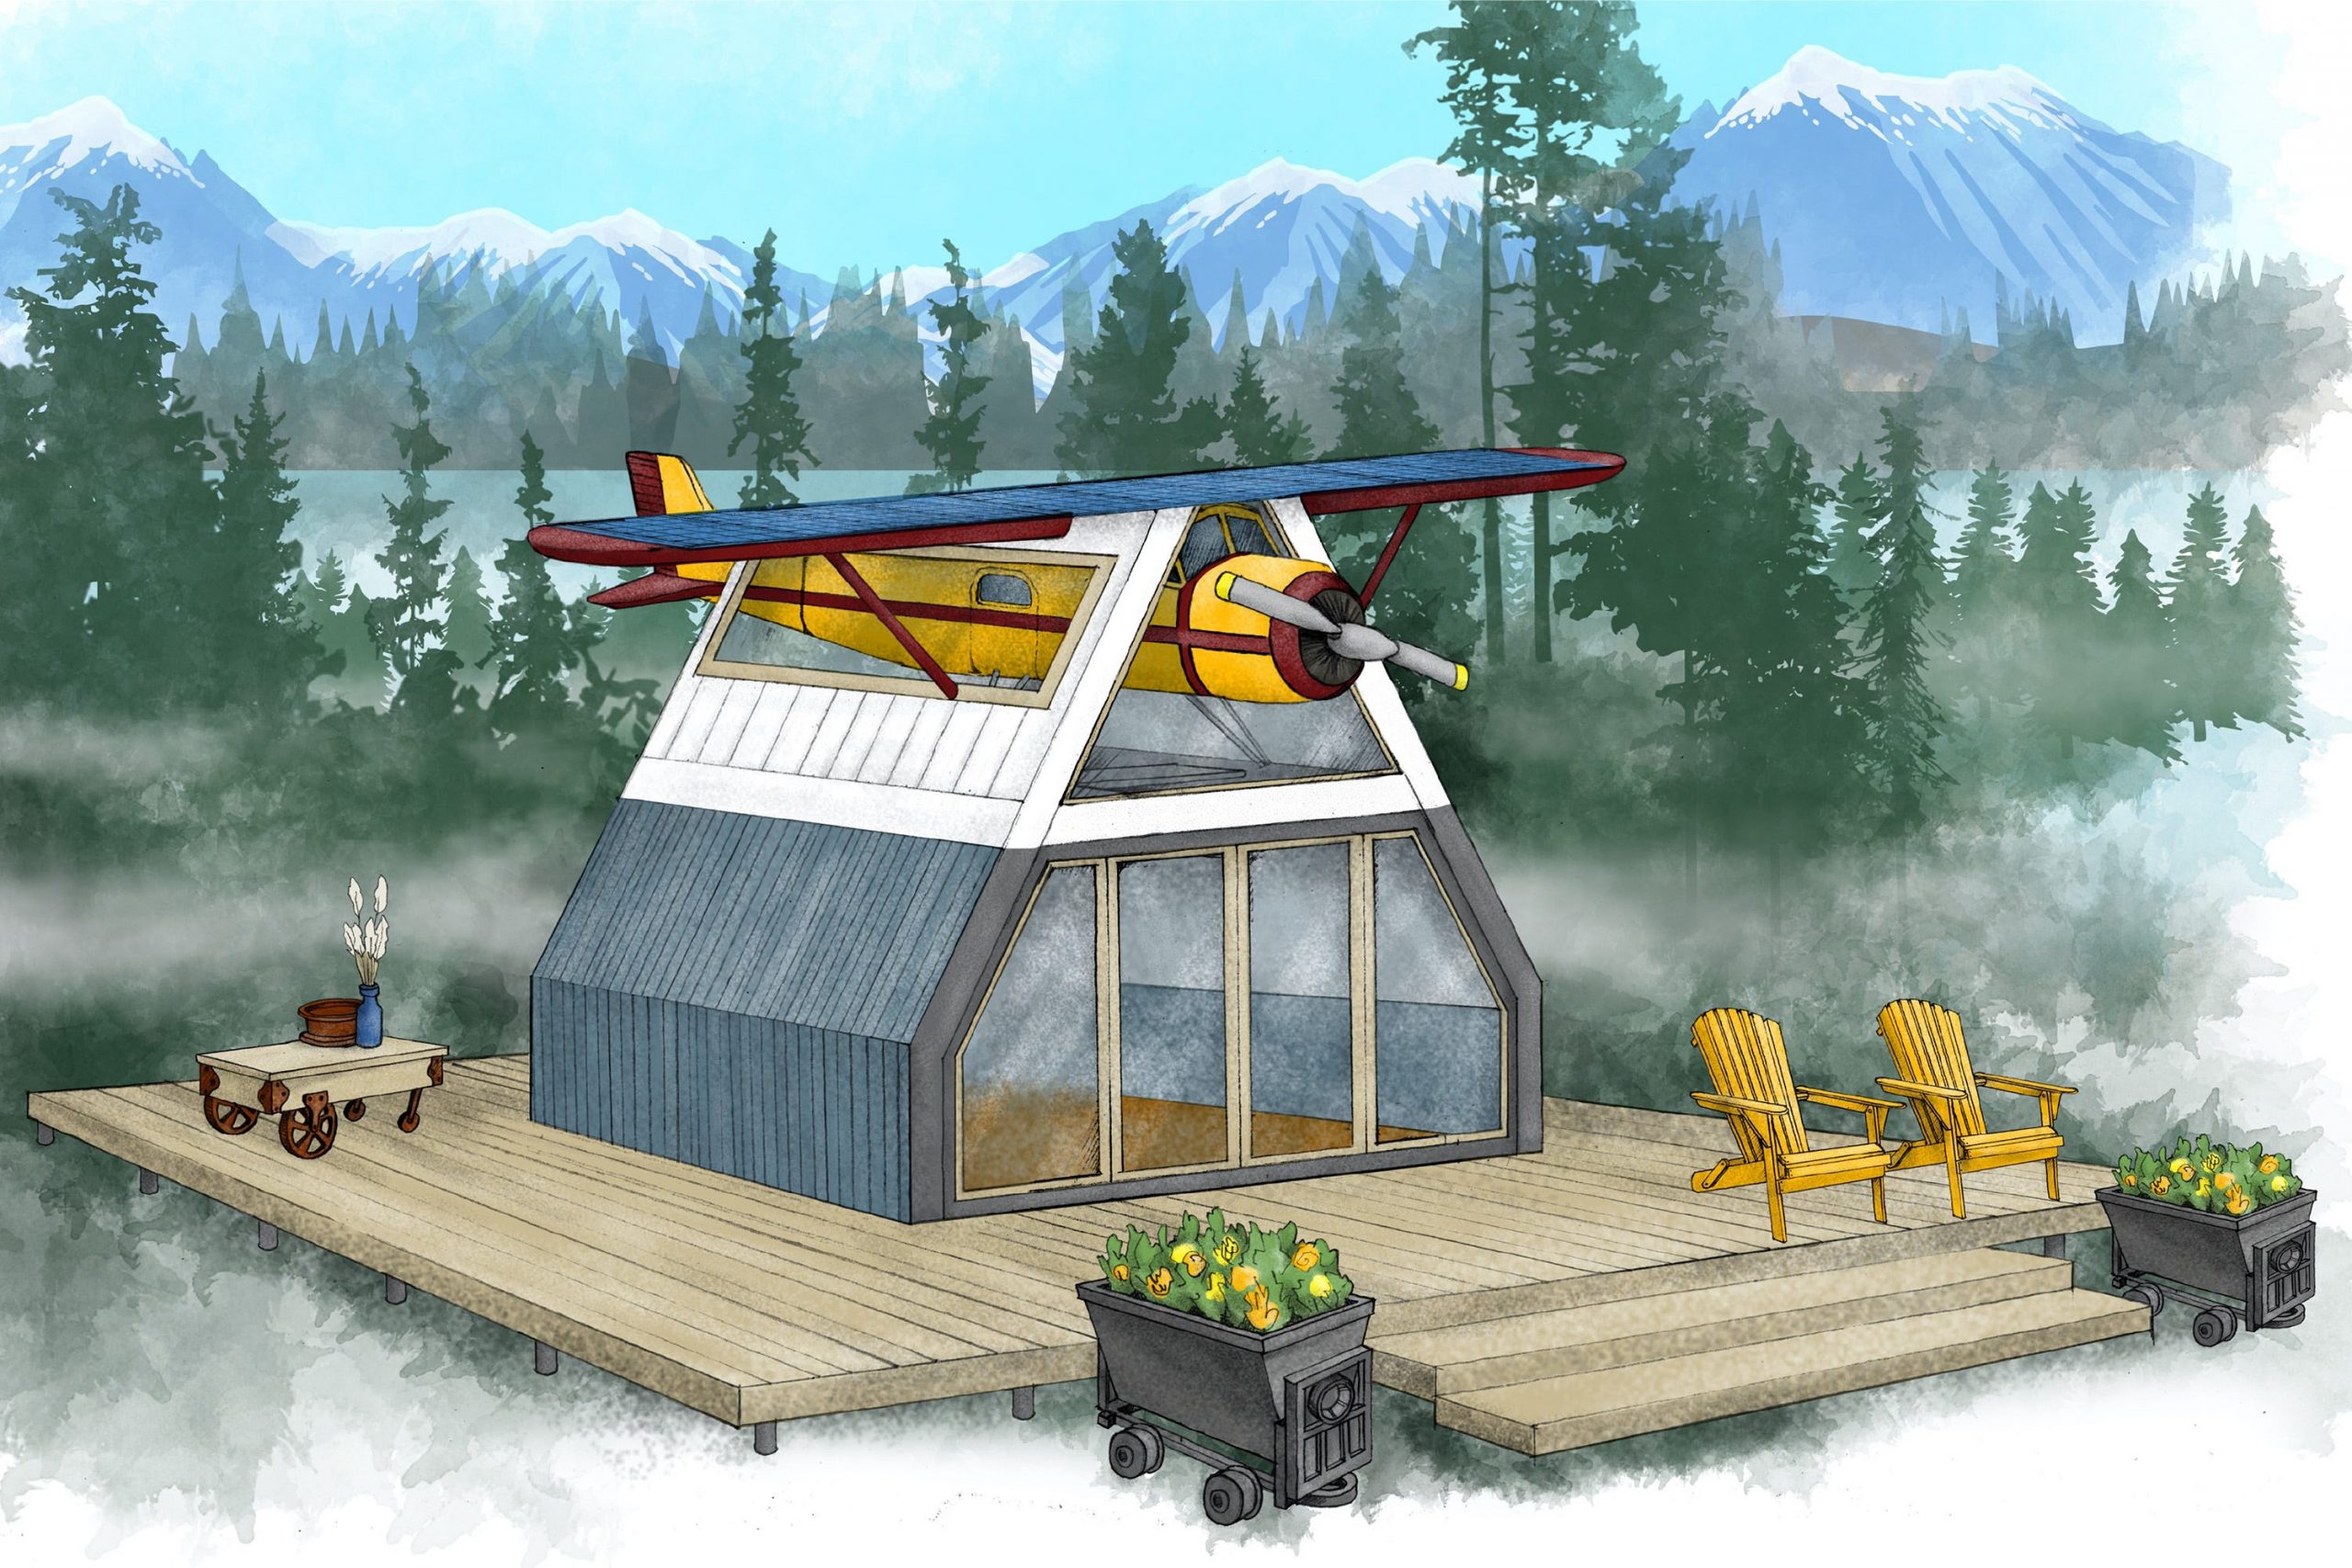 Bush Plane in Alaska Ghost Town by Lisa B. for Airbnb OMG! Fund